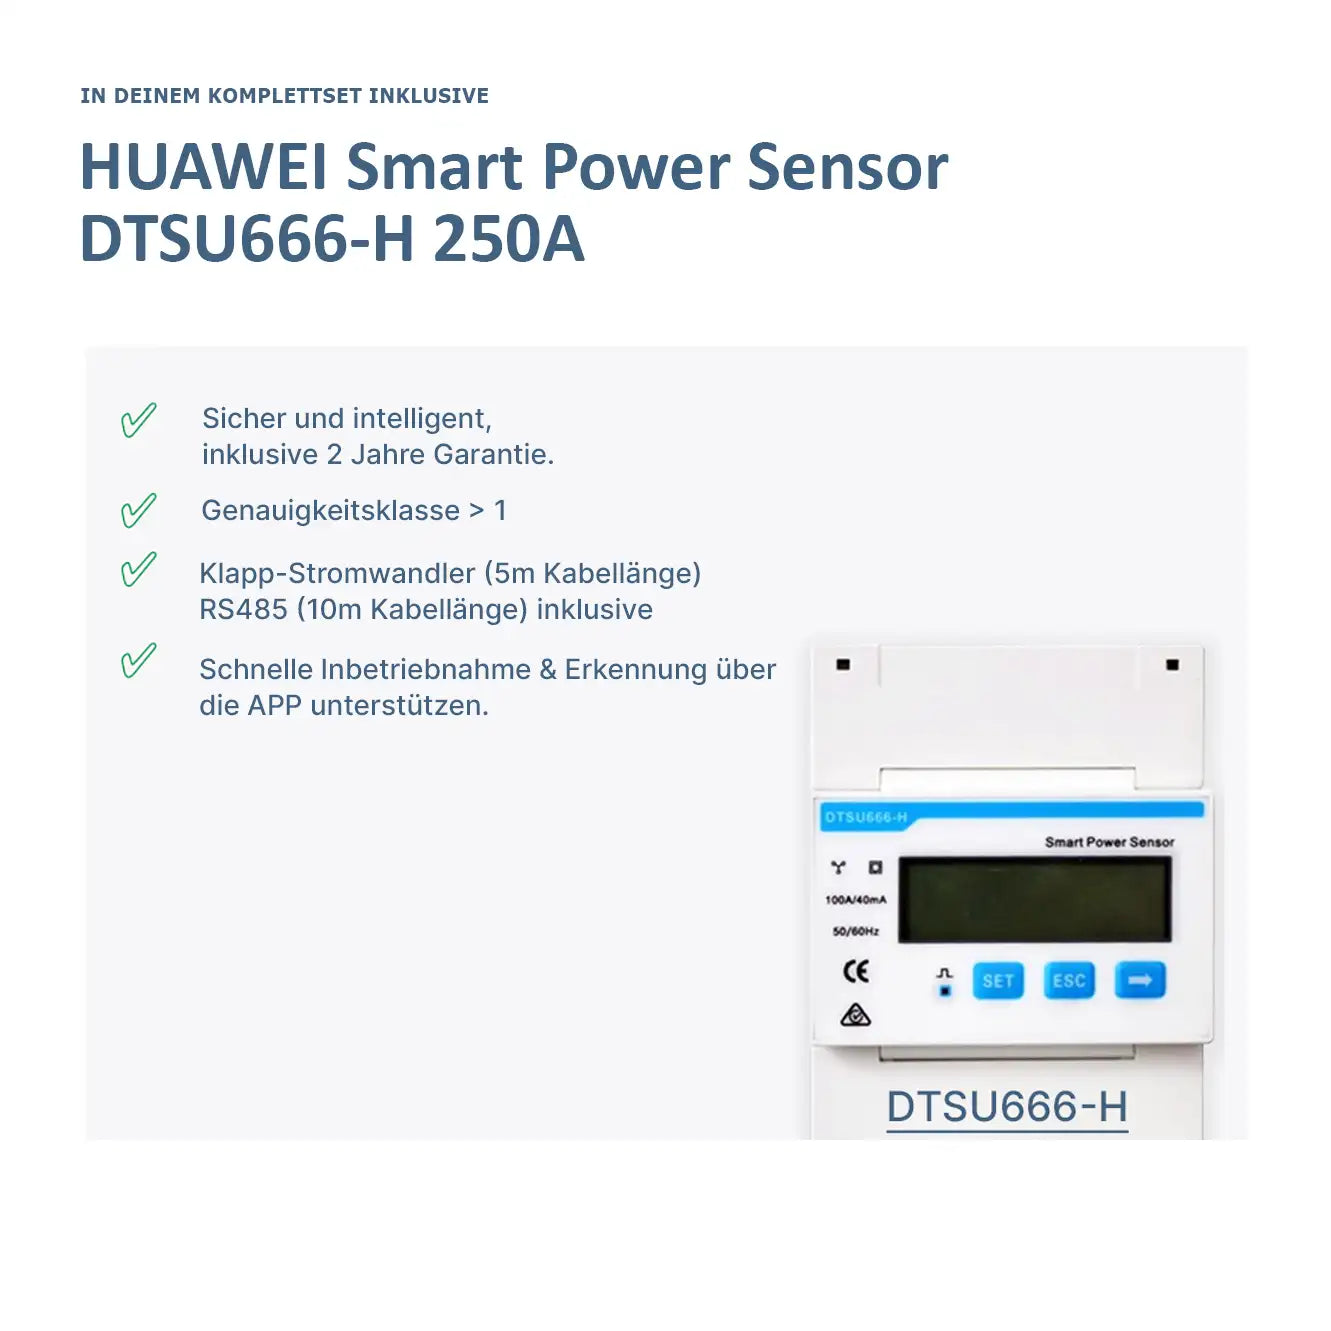 Set Invertor Huawei 10KW LUNA2000 5s0